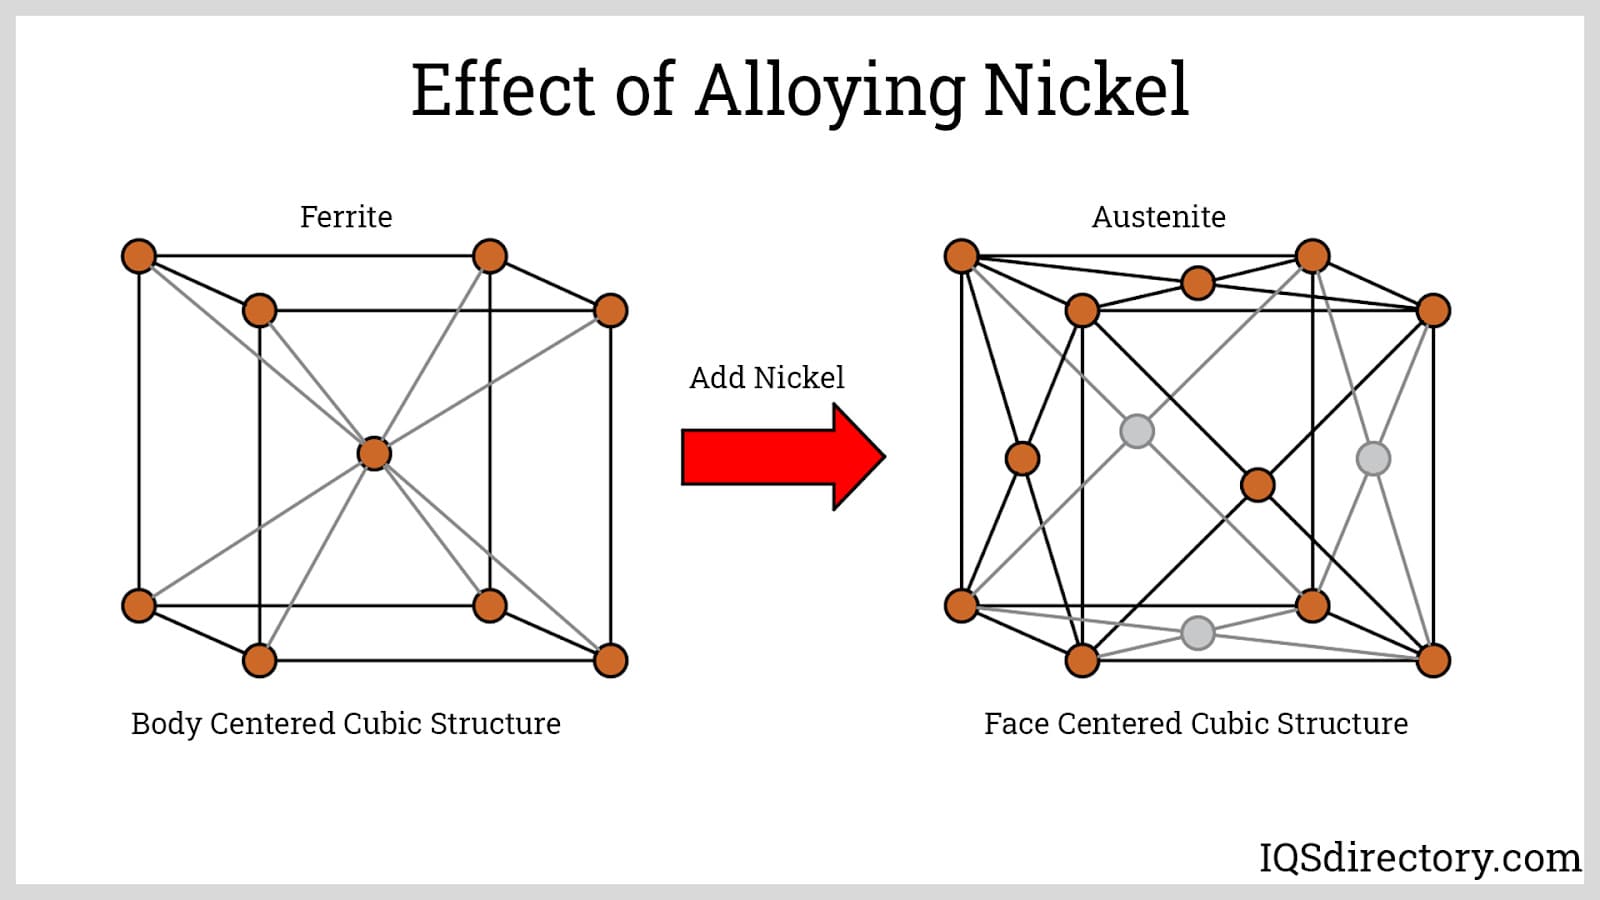 Effect of Alloying Nickel